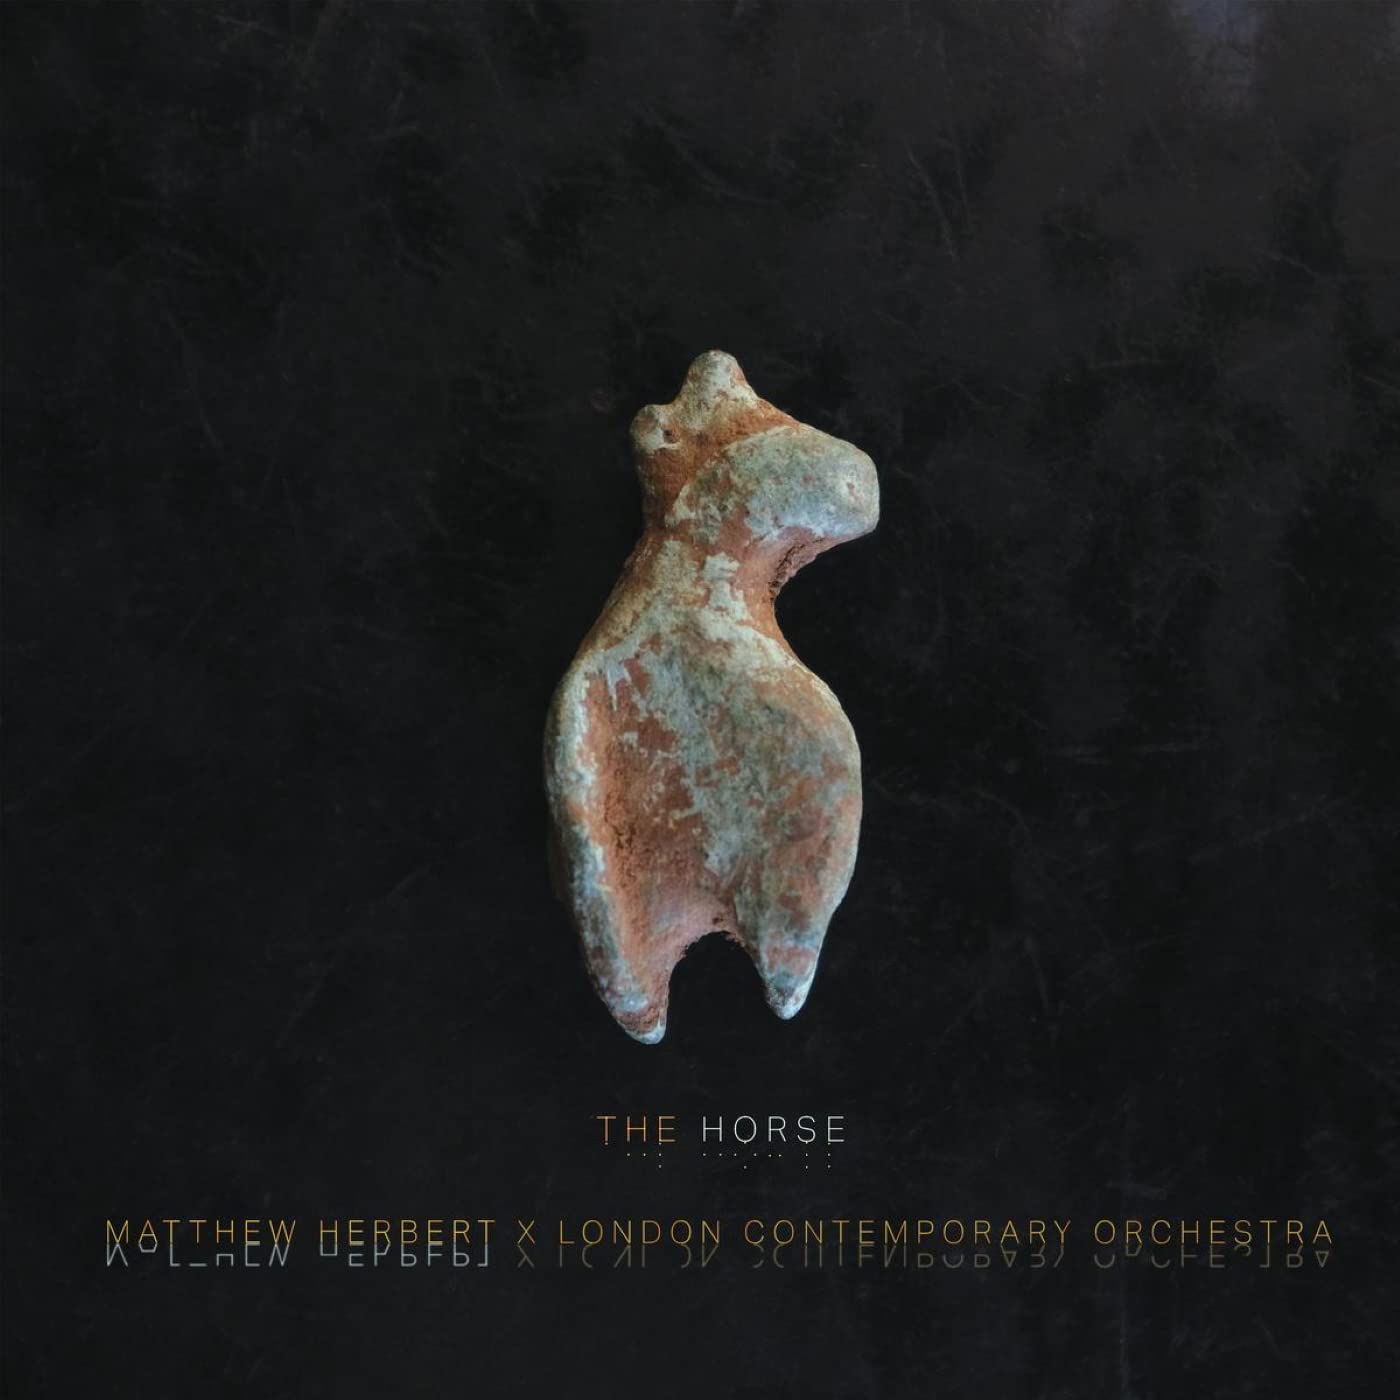 MATTHEW HERBERT X LONDON CONTEMPORARY ORCHESTRA - The Horse - 2LP - Vinyl [MAY 26]